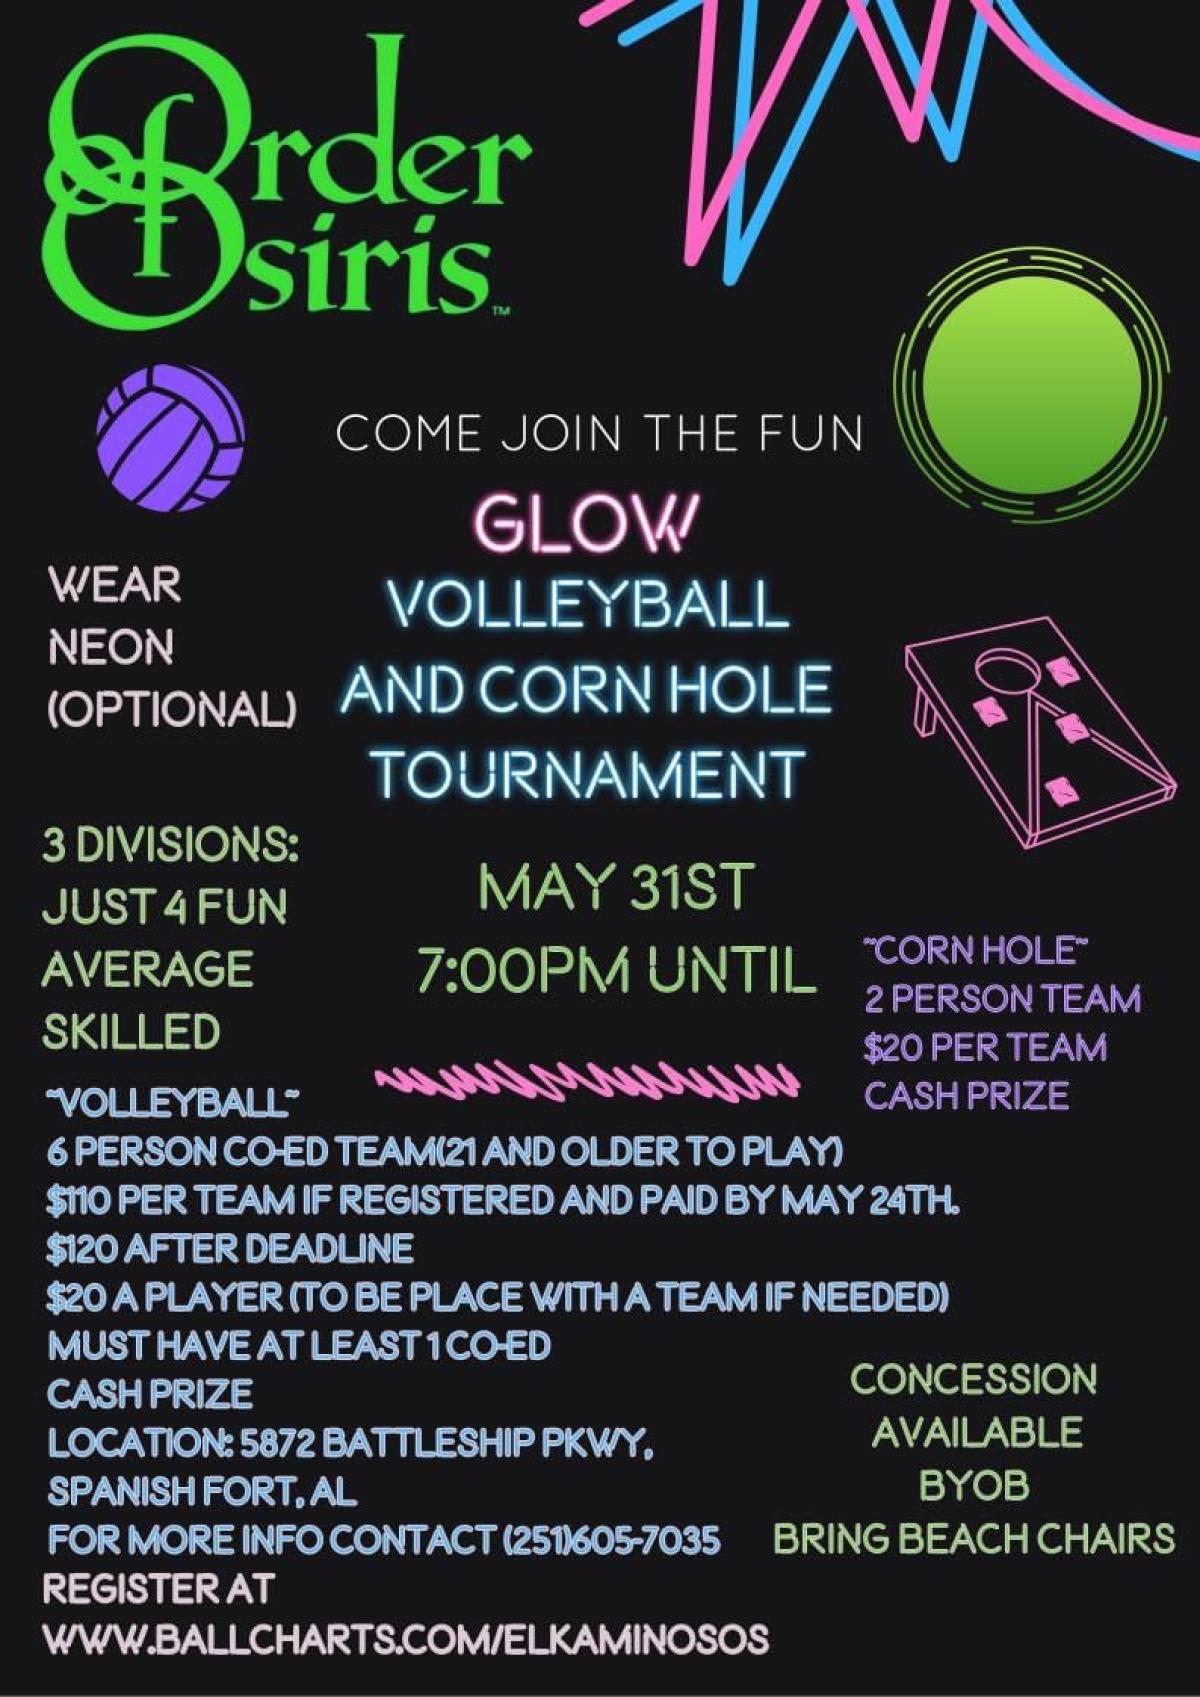 Glow Volleyball / Corn hole Tournament